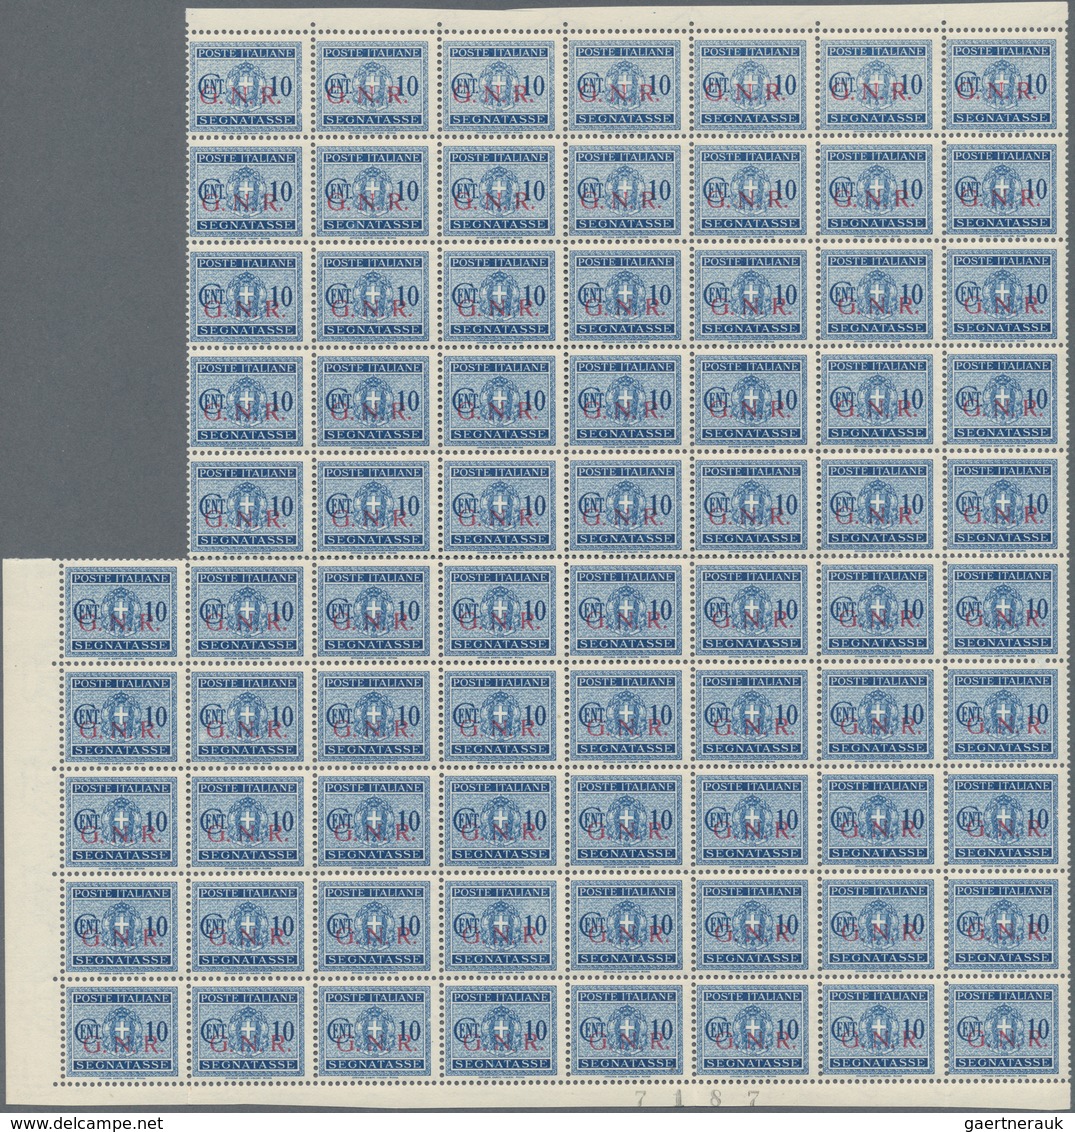 Italien: 1944, Republika Sociale "G.N.R." Issue 10 C. Blue 150 Stamps Mint Never Hinged Large Blocks - Verzamelingen